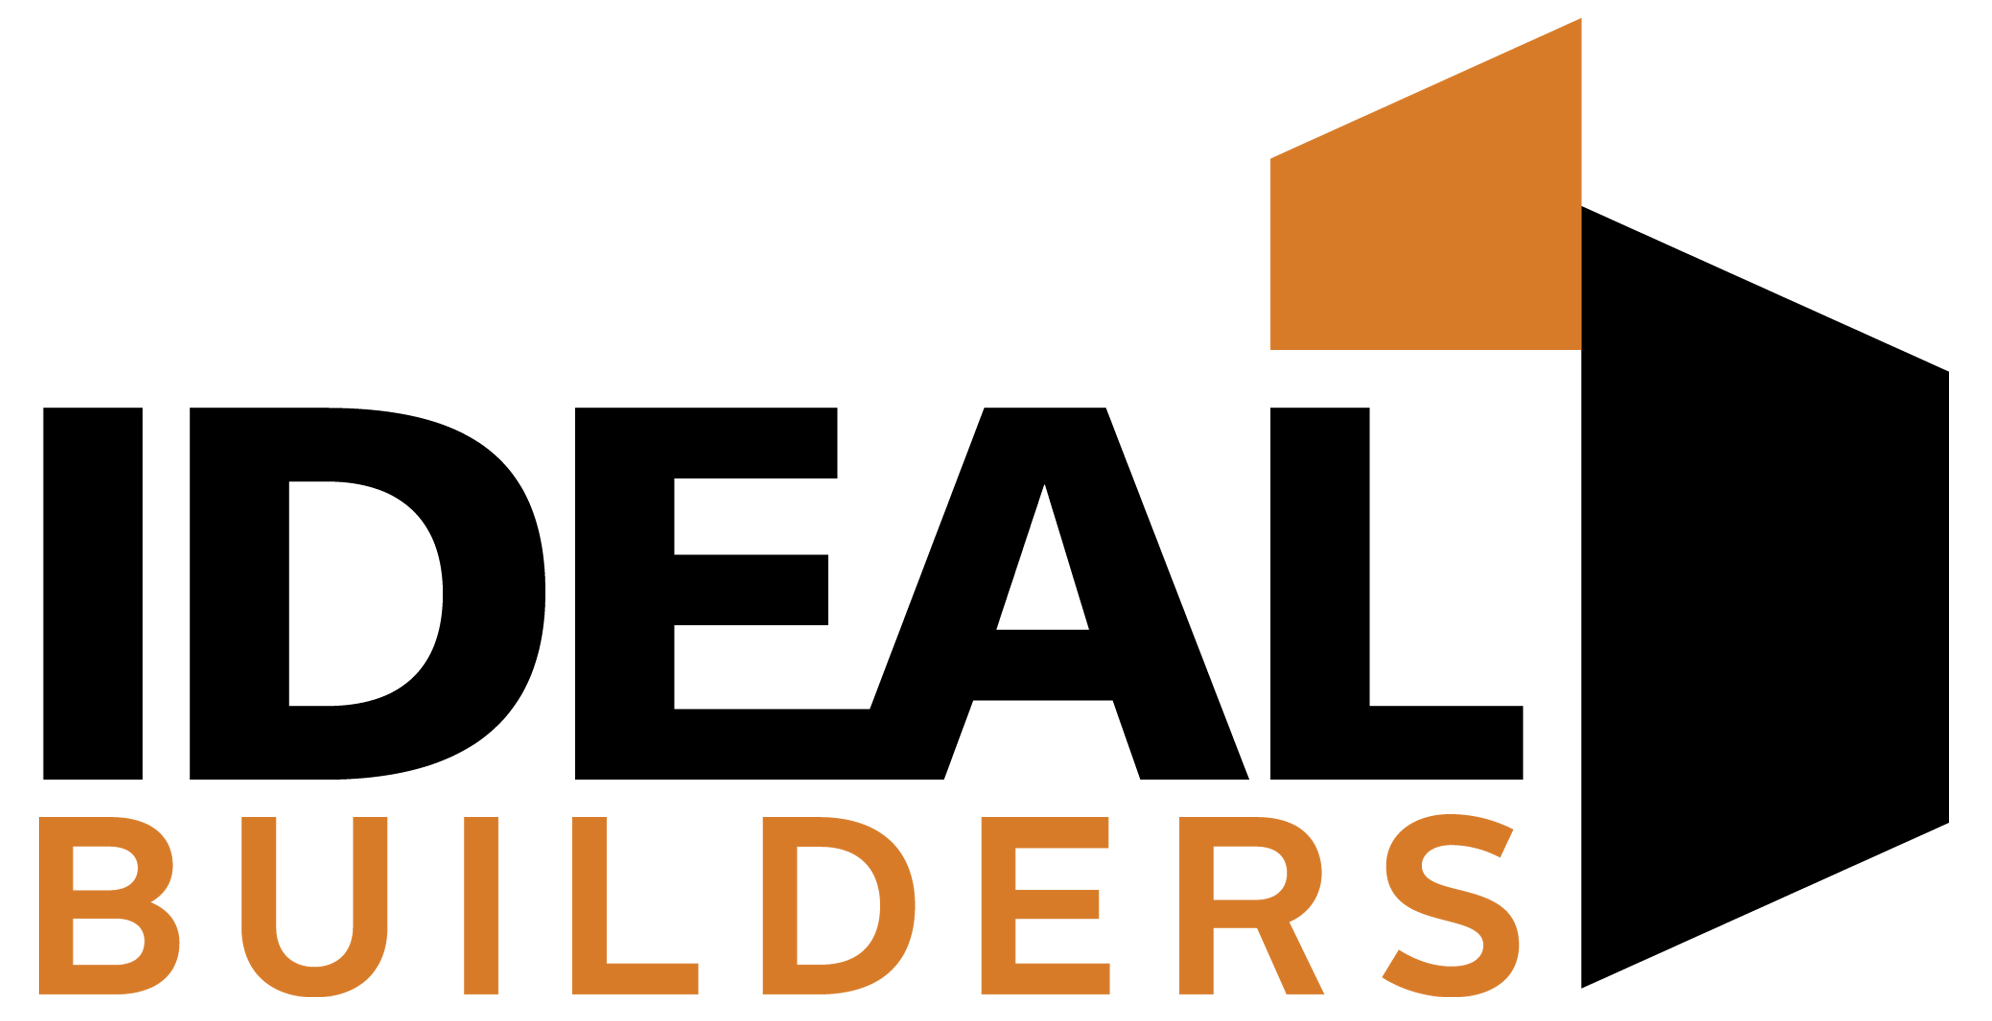 Ideal Builders